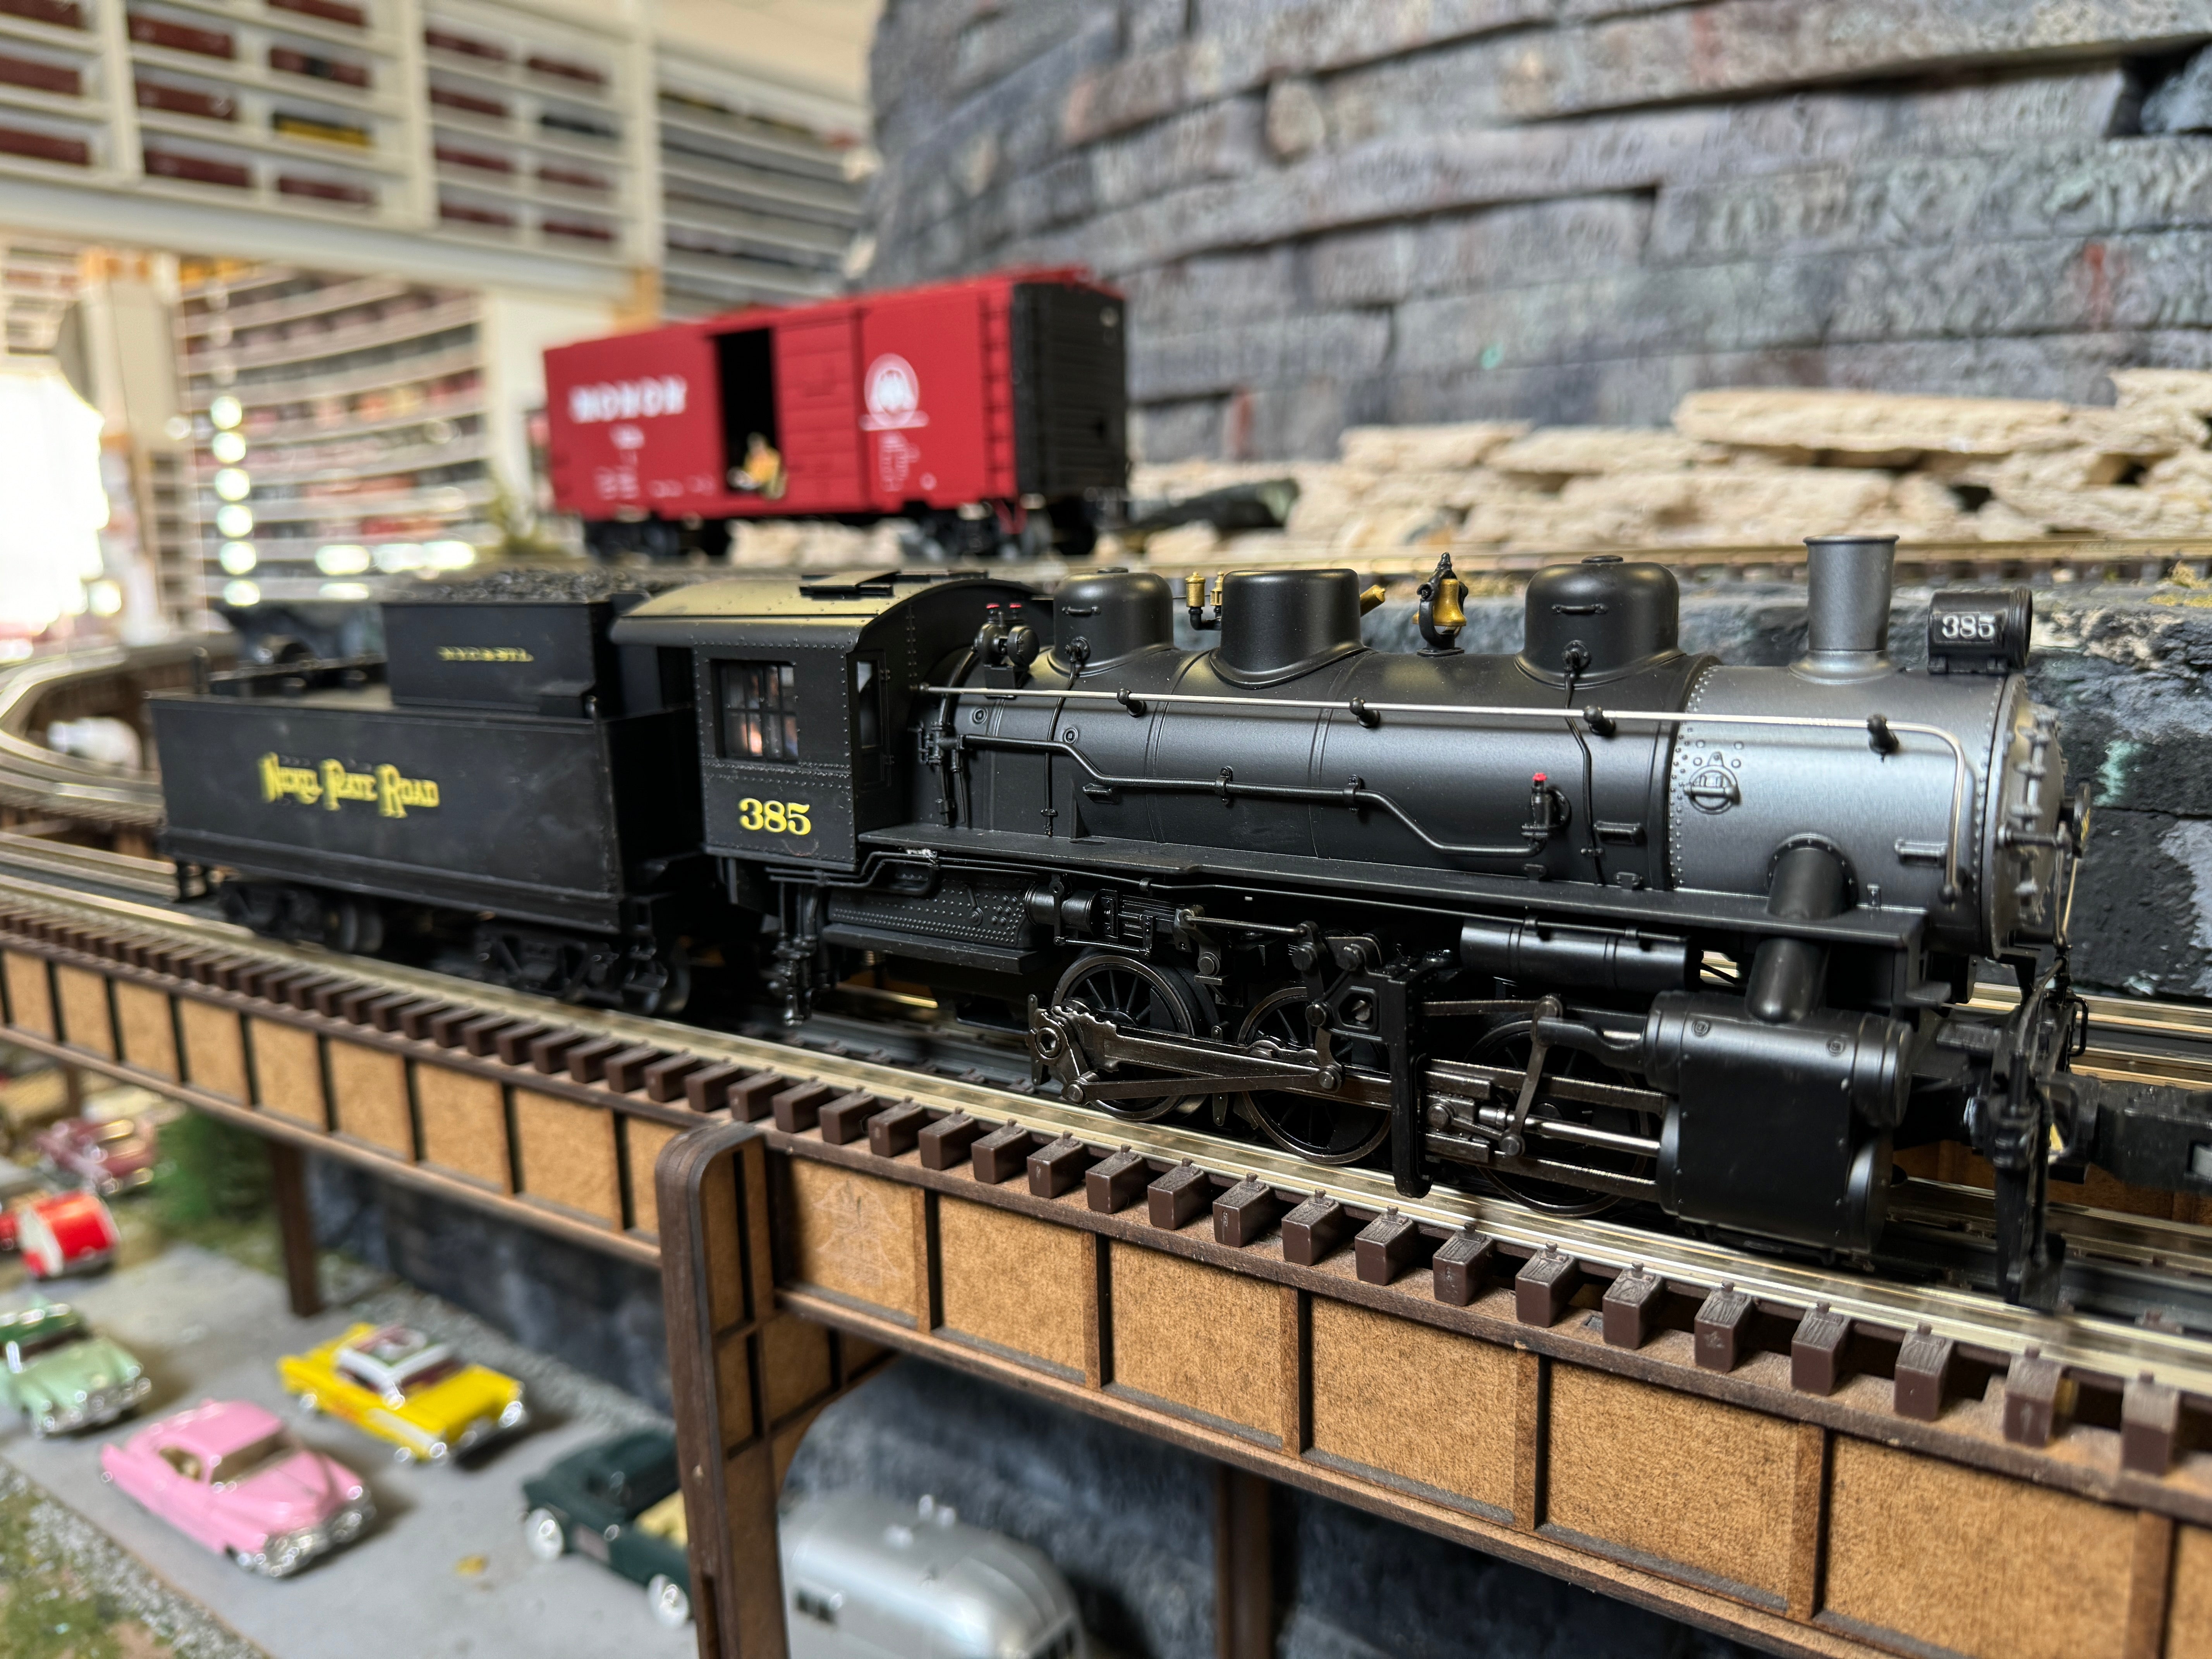 Lionel 223159NKP - Legacy 0-6-0 Steam Locomotive "Nickel Plate Road" Custom Lettered by Harry Hieke